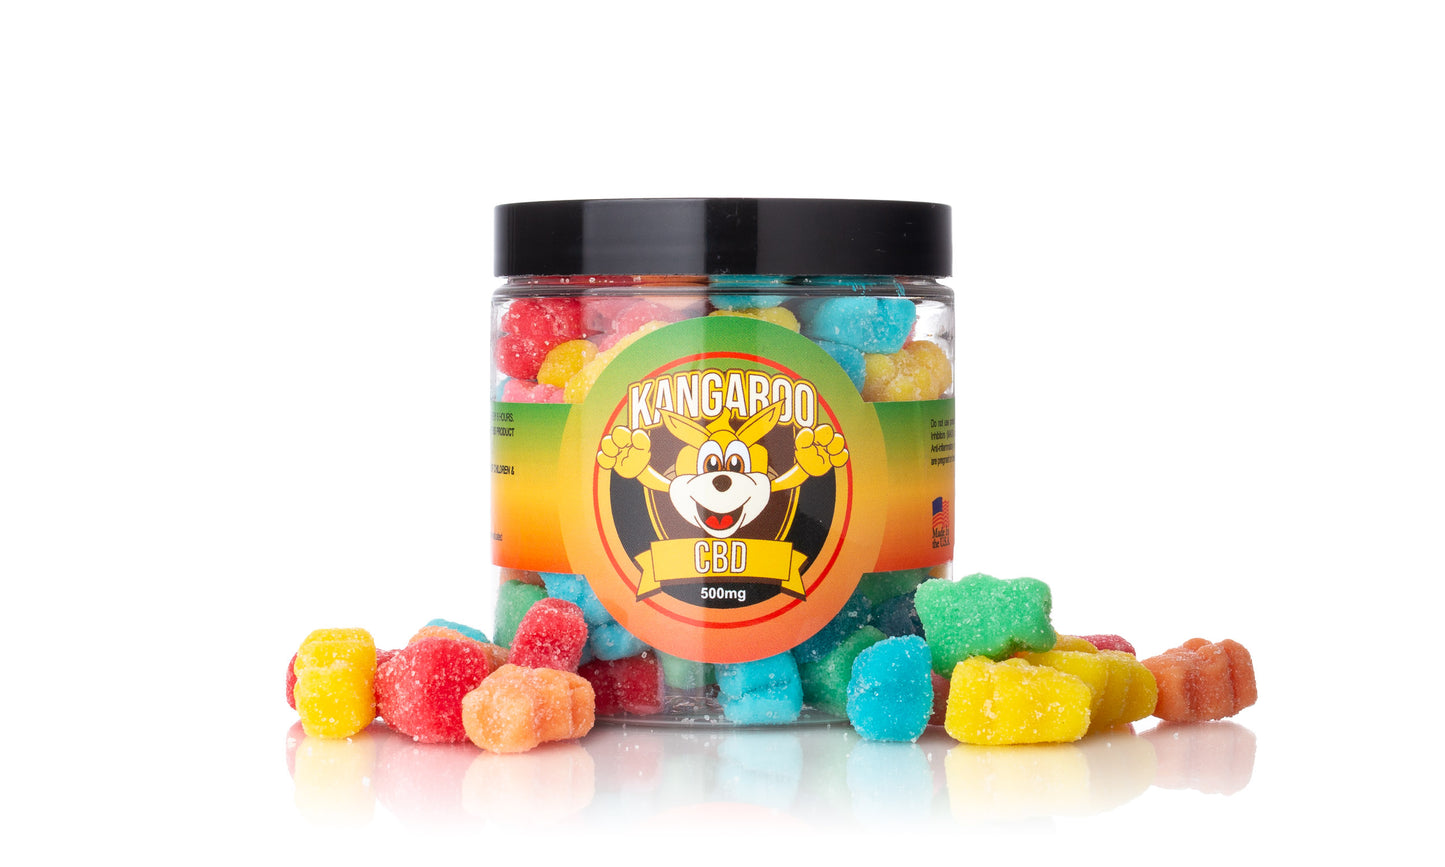 Kangaroo CBD Infused Sour Gummy Bears